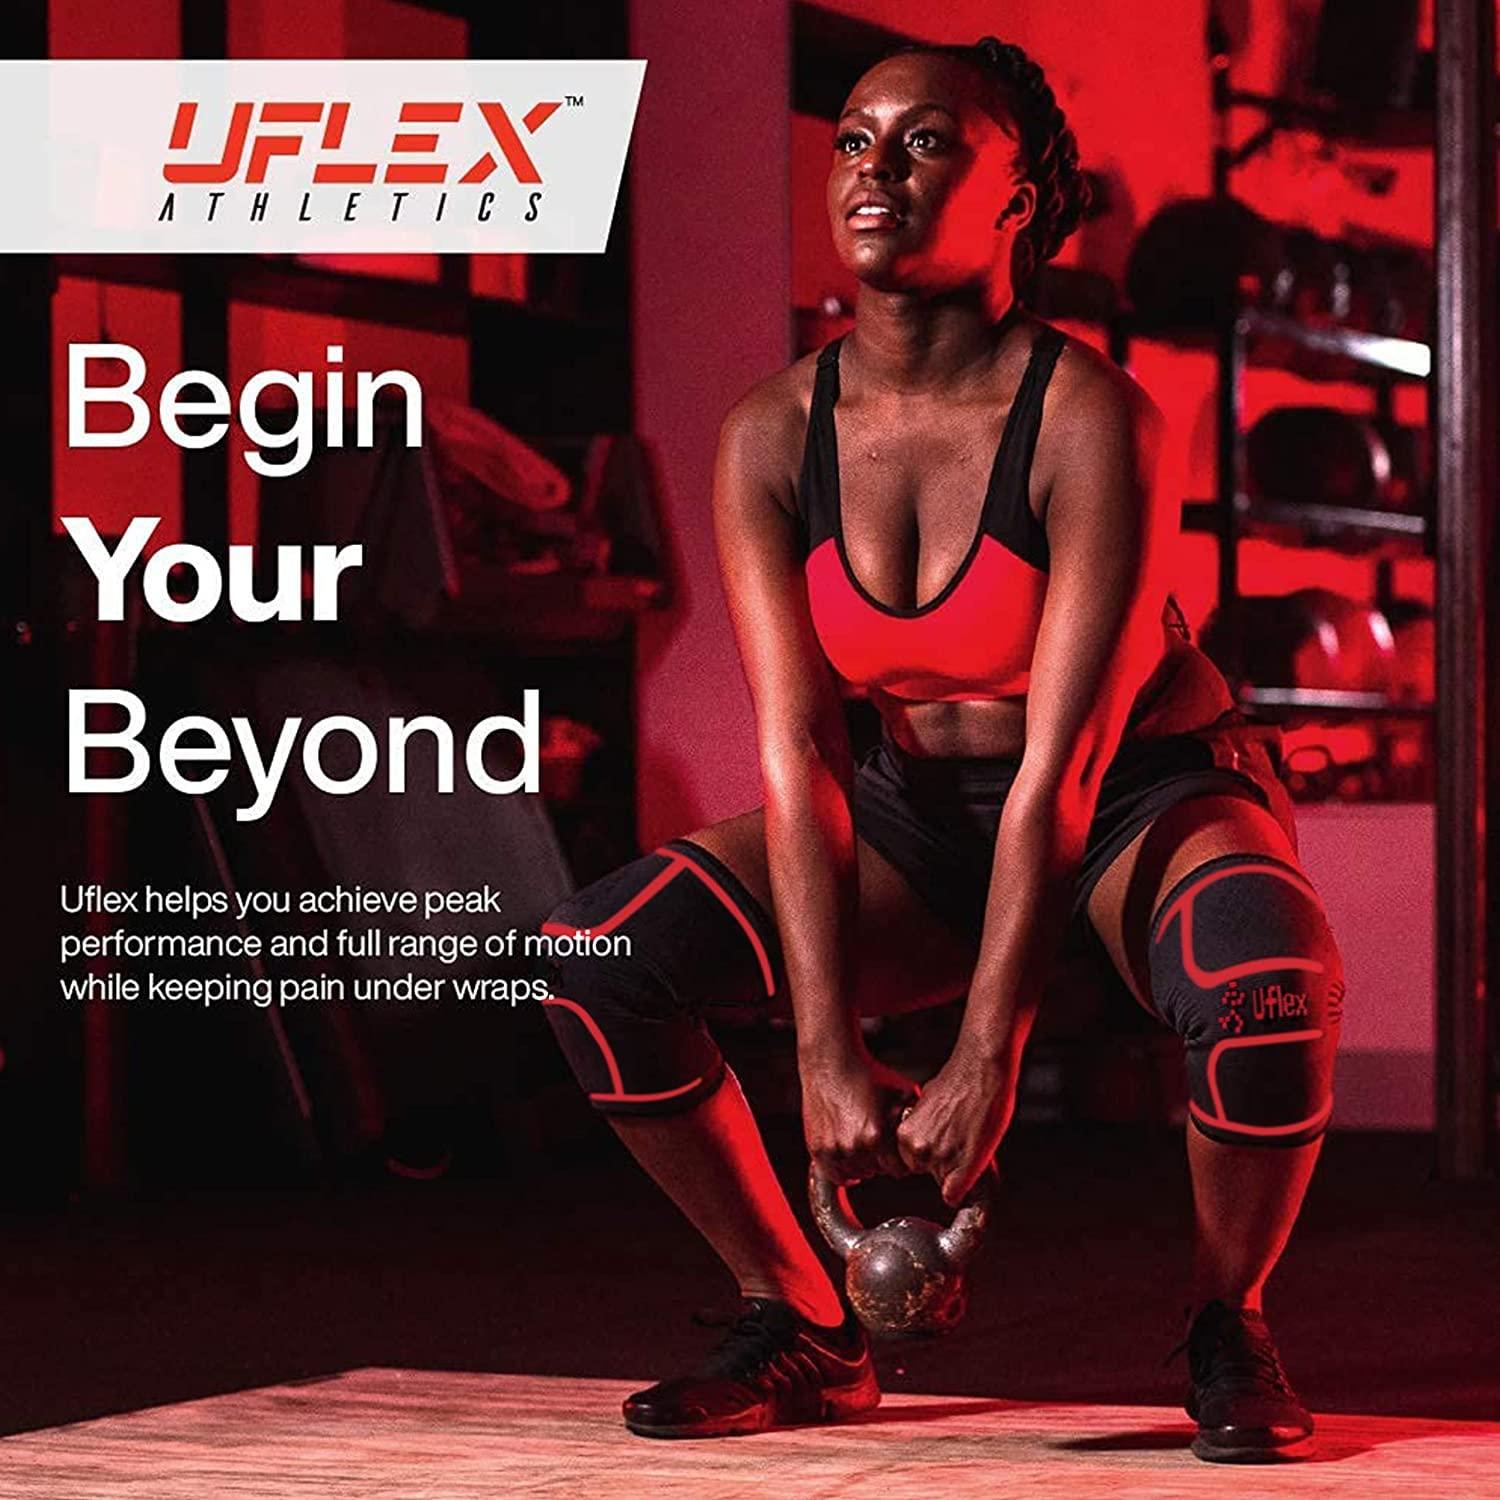 UFlex Athletics Compression Sleeves in Sports Medicine 